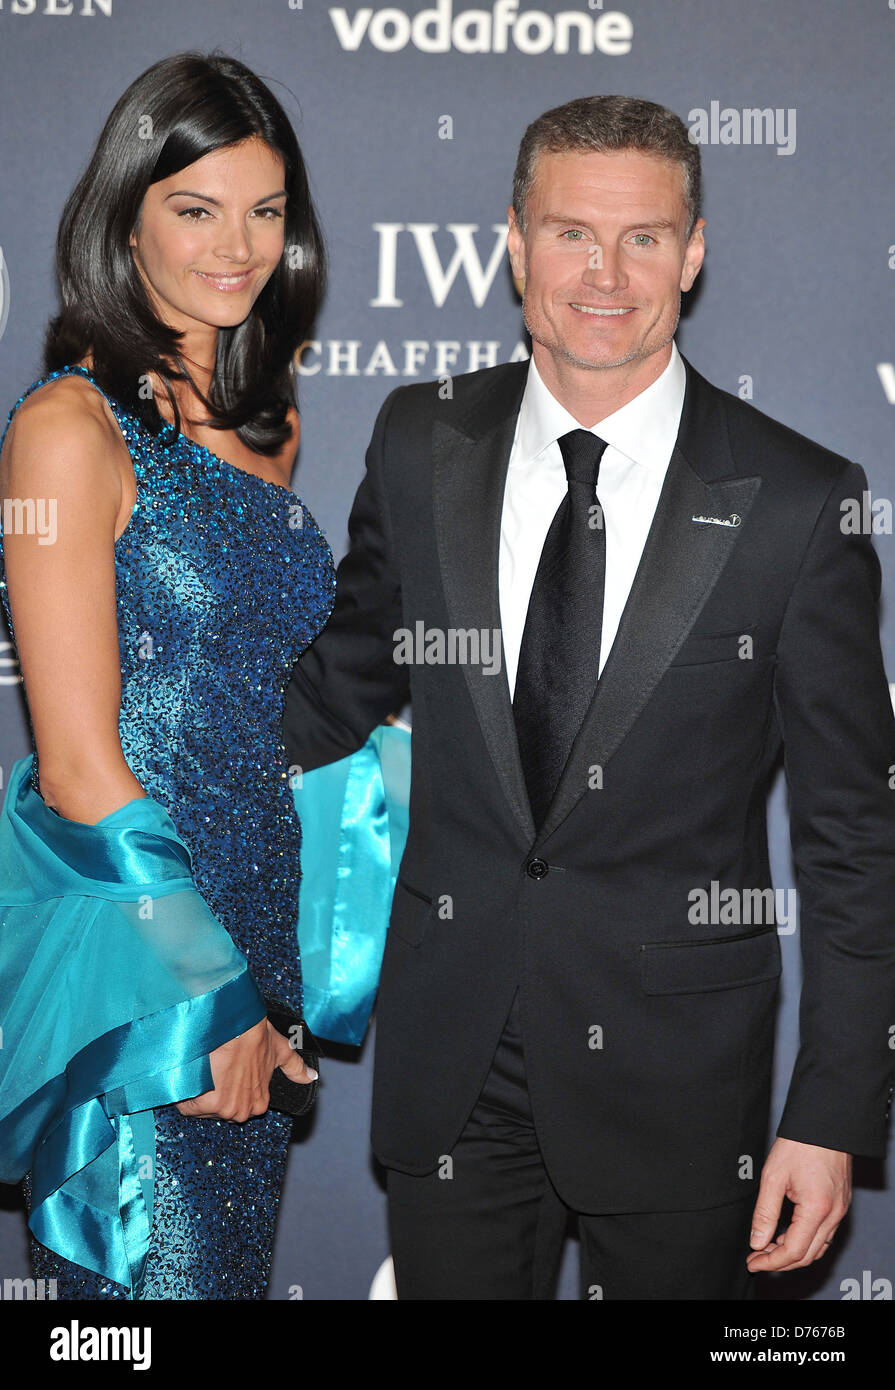 David Coulthard and Karen Minier Laureus Sport Awards held at the Queen Elizabeth II Centre - Arrival. London, England - Stock Photo